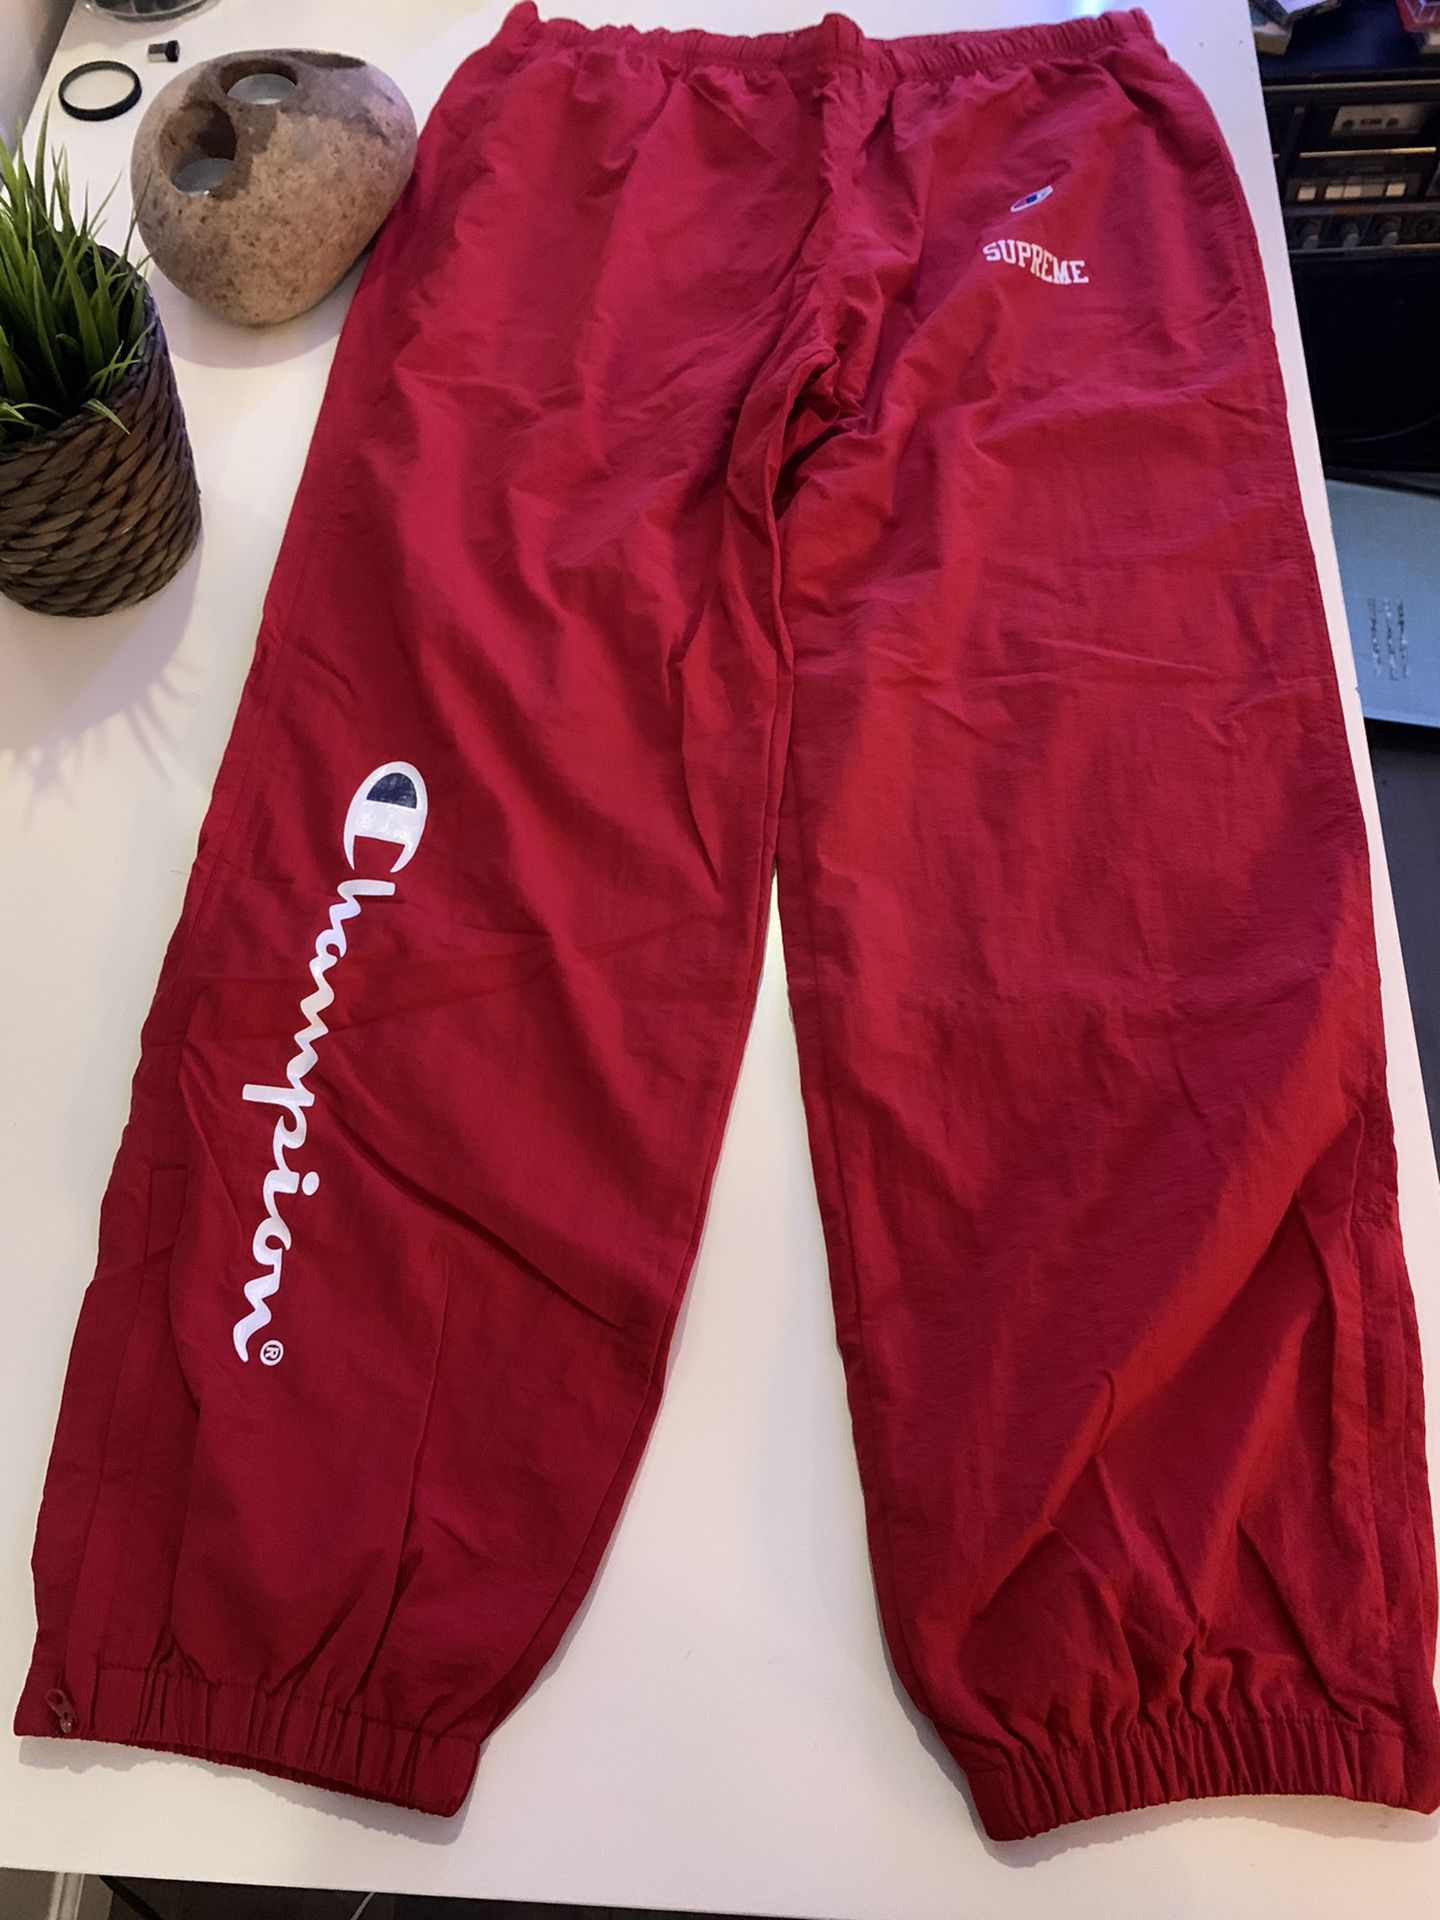 SUPREME X CHAMPION track PANTS DARK RED size medium